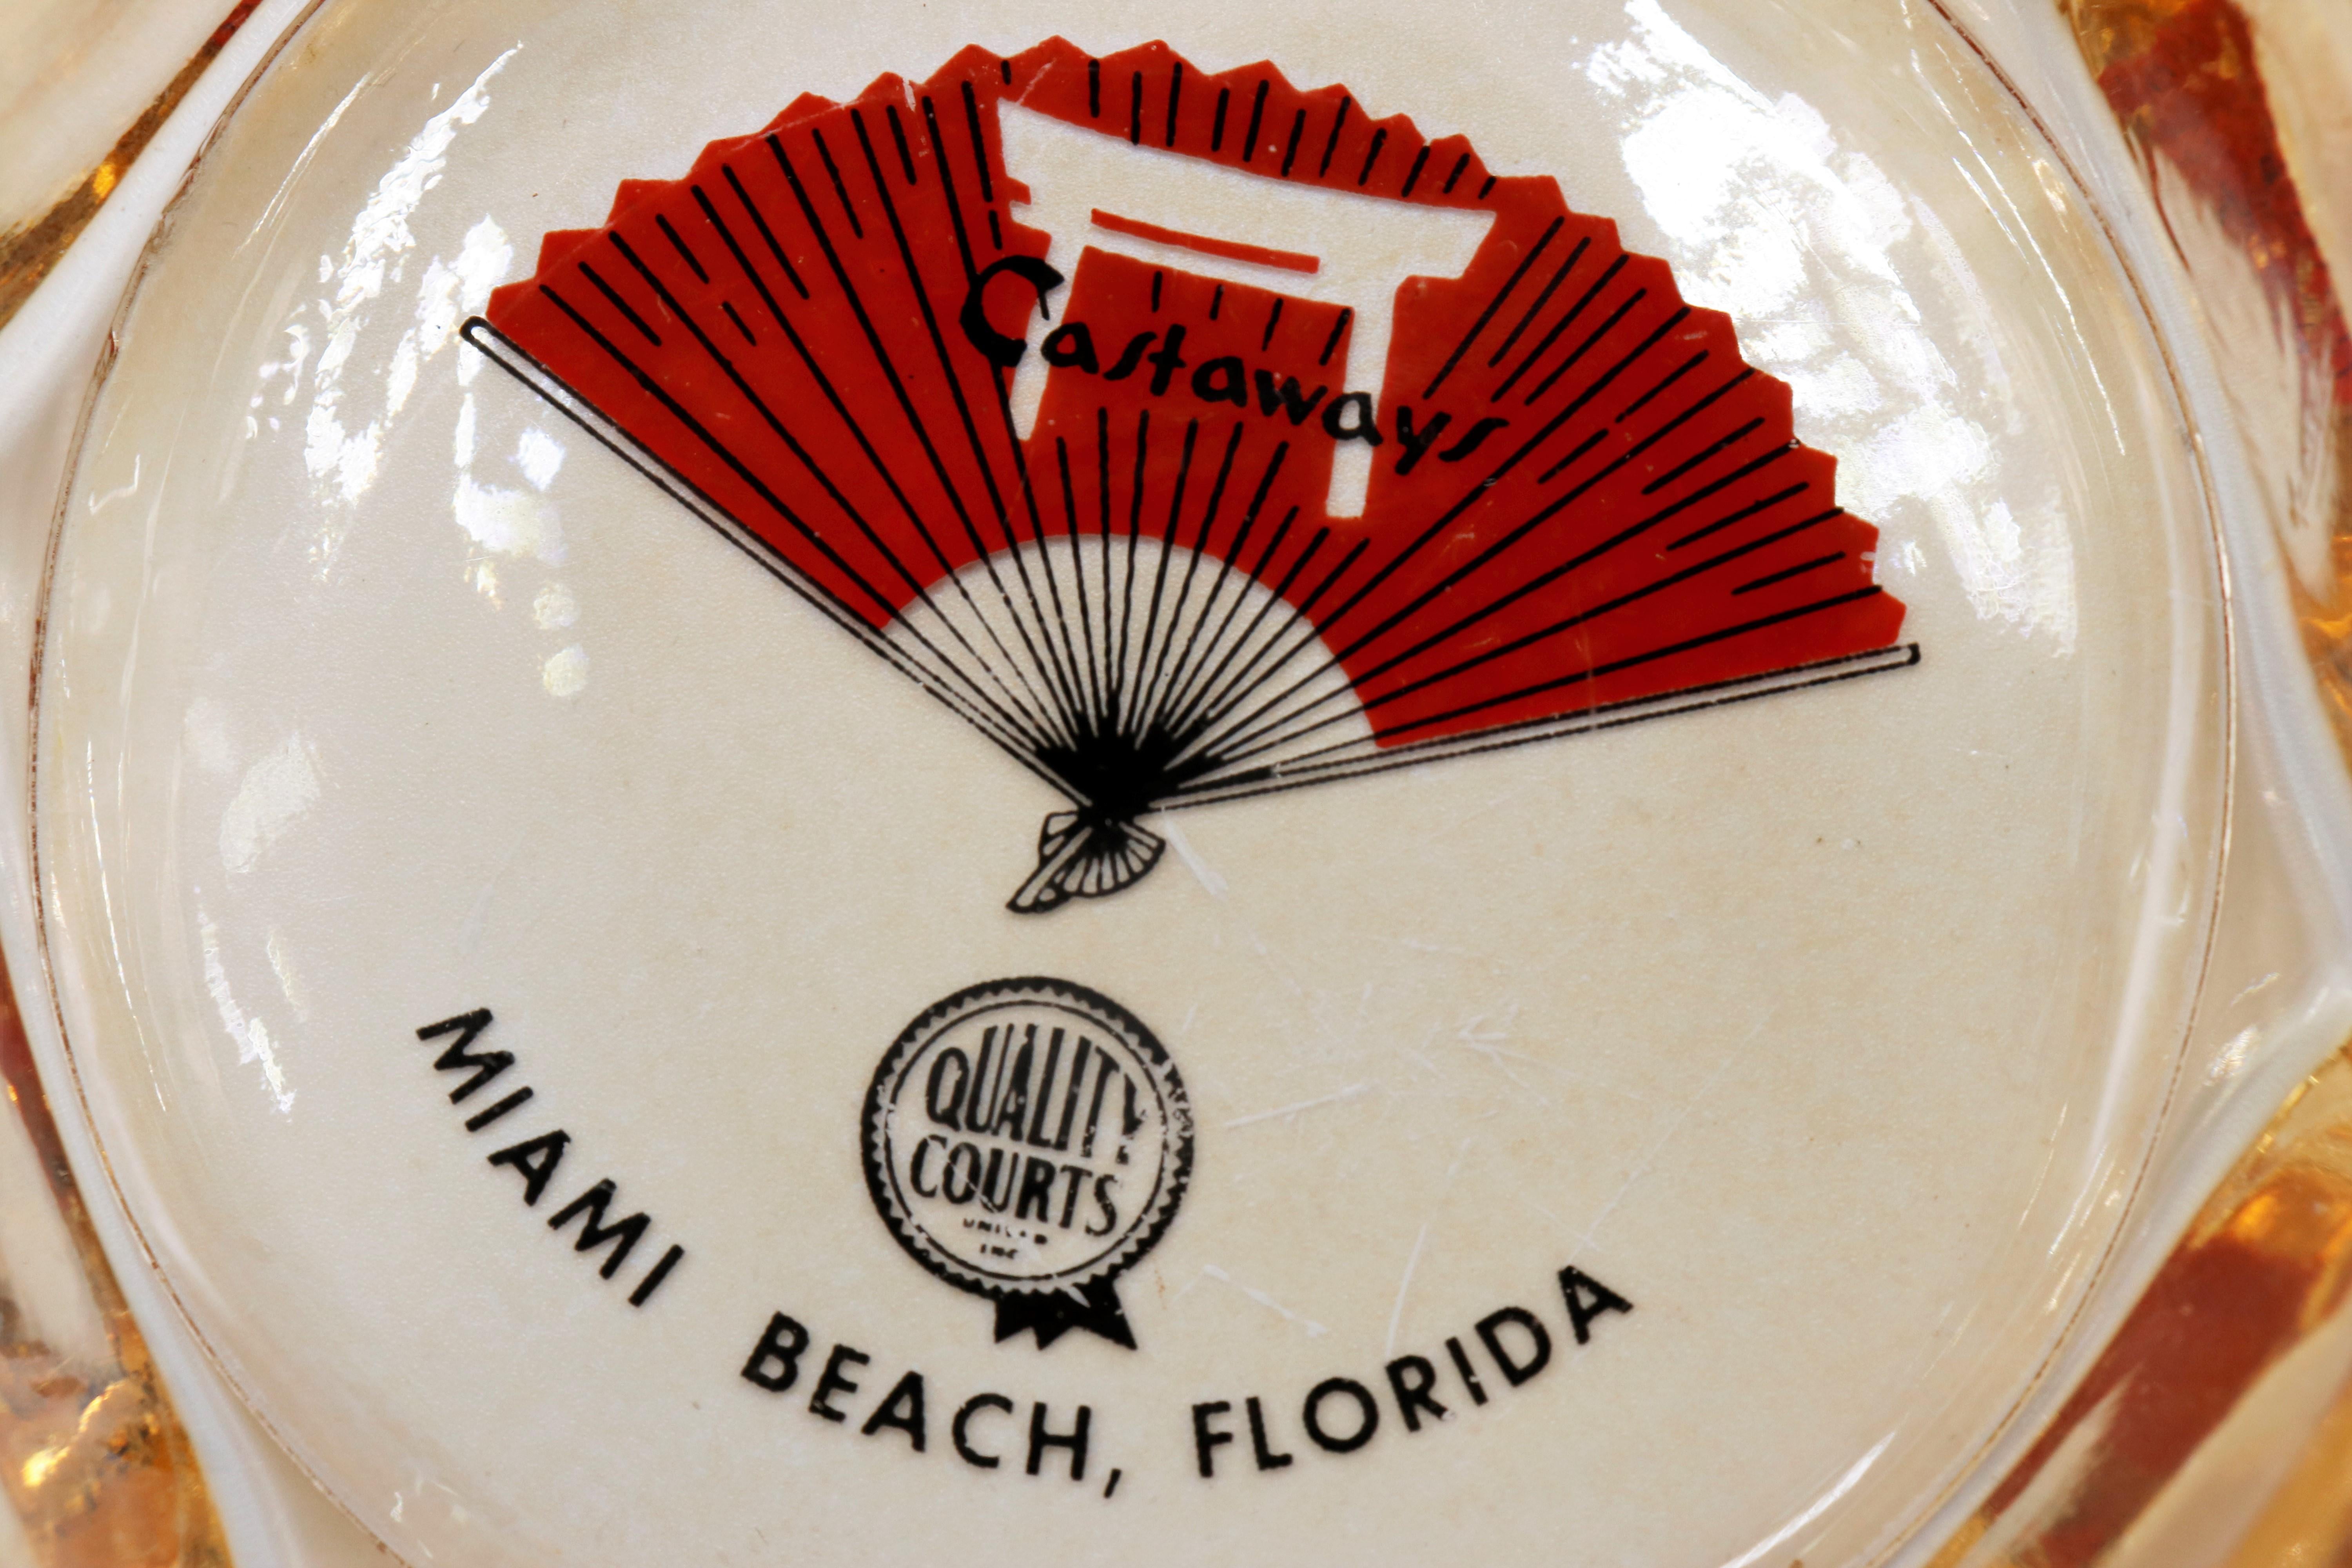 Mid-Century Modern Castaways Hotel Miami Beach Glass Ashtrays - a Pair For Sale